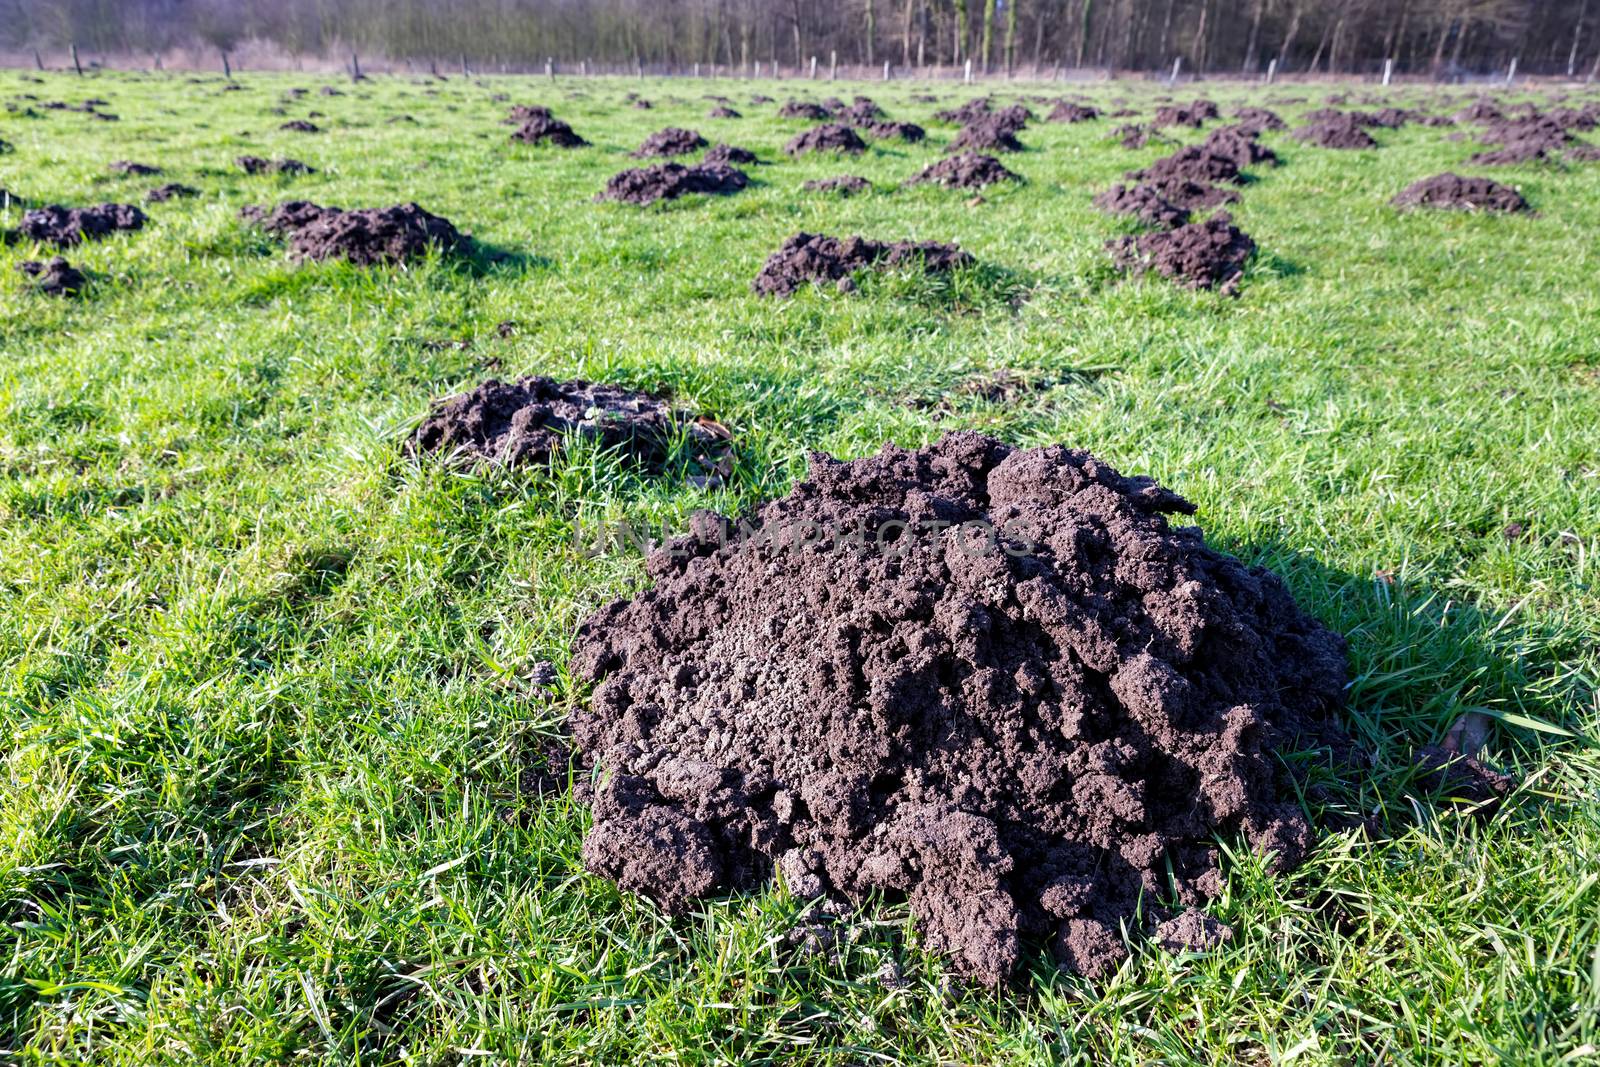 Many molehills in green grassland by BenSchonewille